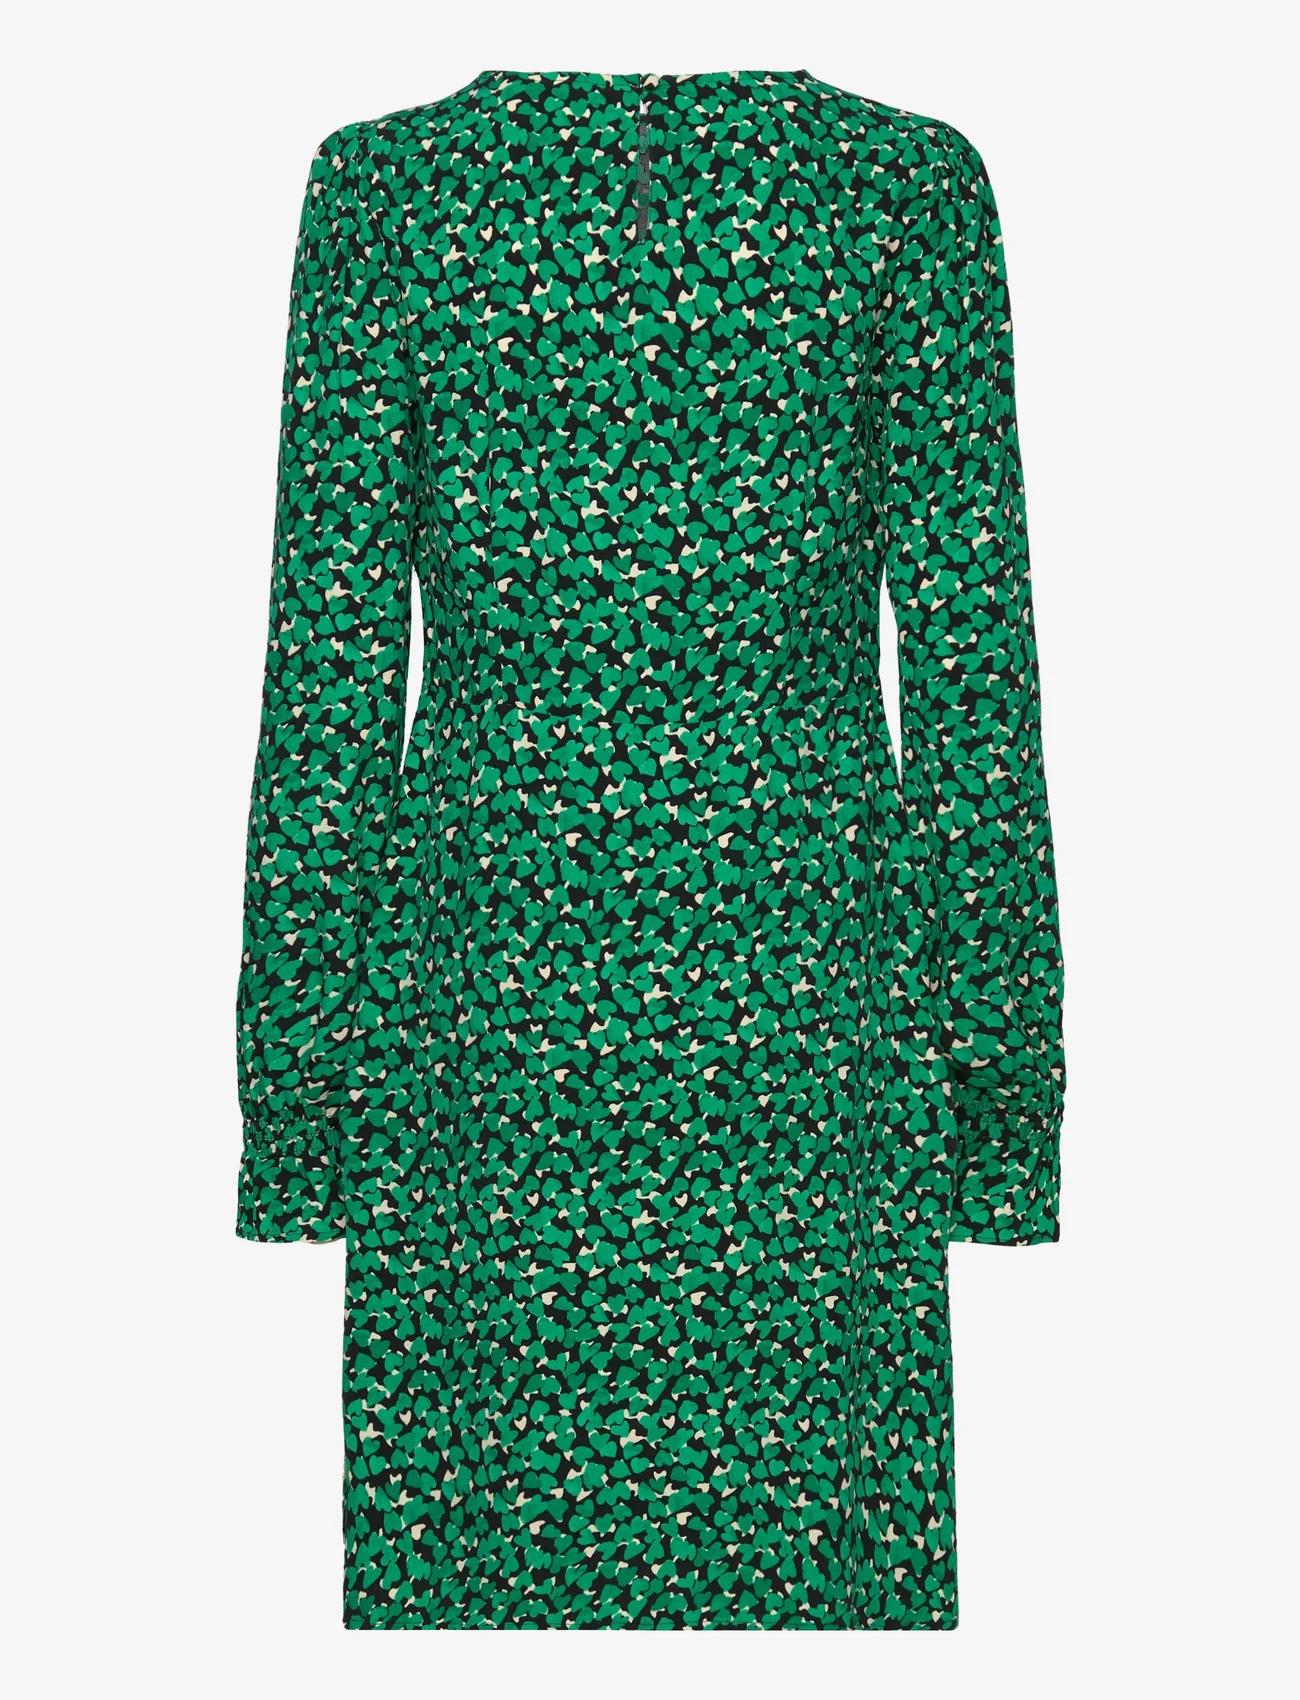 Fabienne Chapot - Chacha Dress - sukienki do kolan i midi - feeling green/black - 1